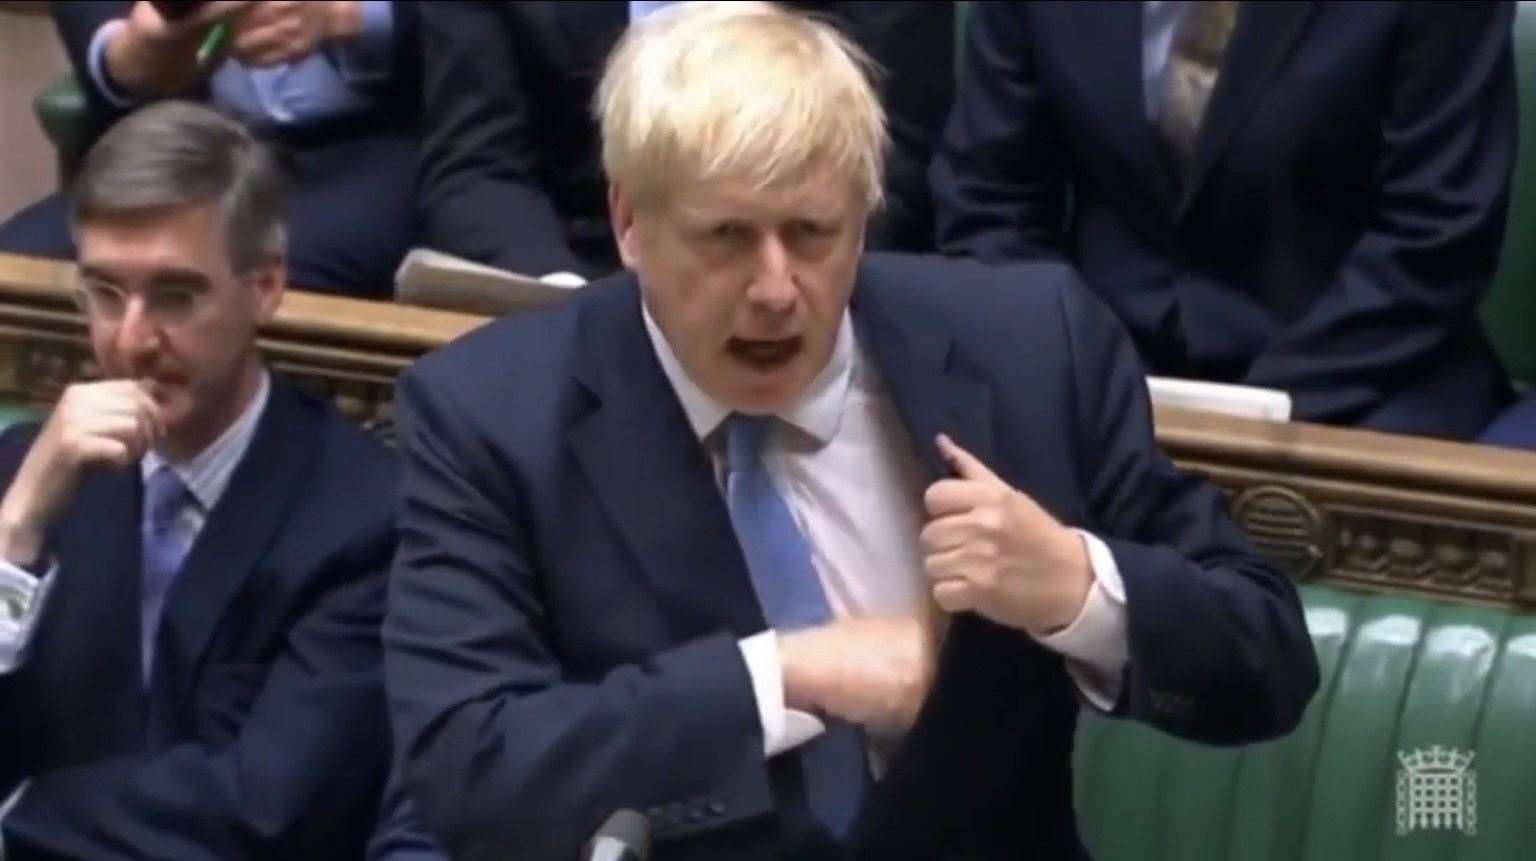 Boris slips his pen into his left hand inside jacket pocket.